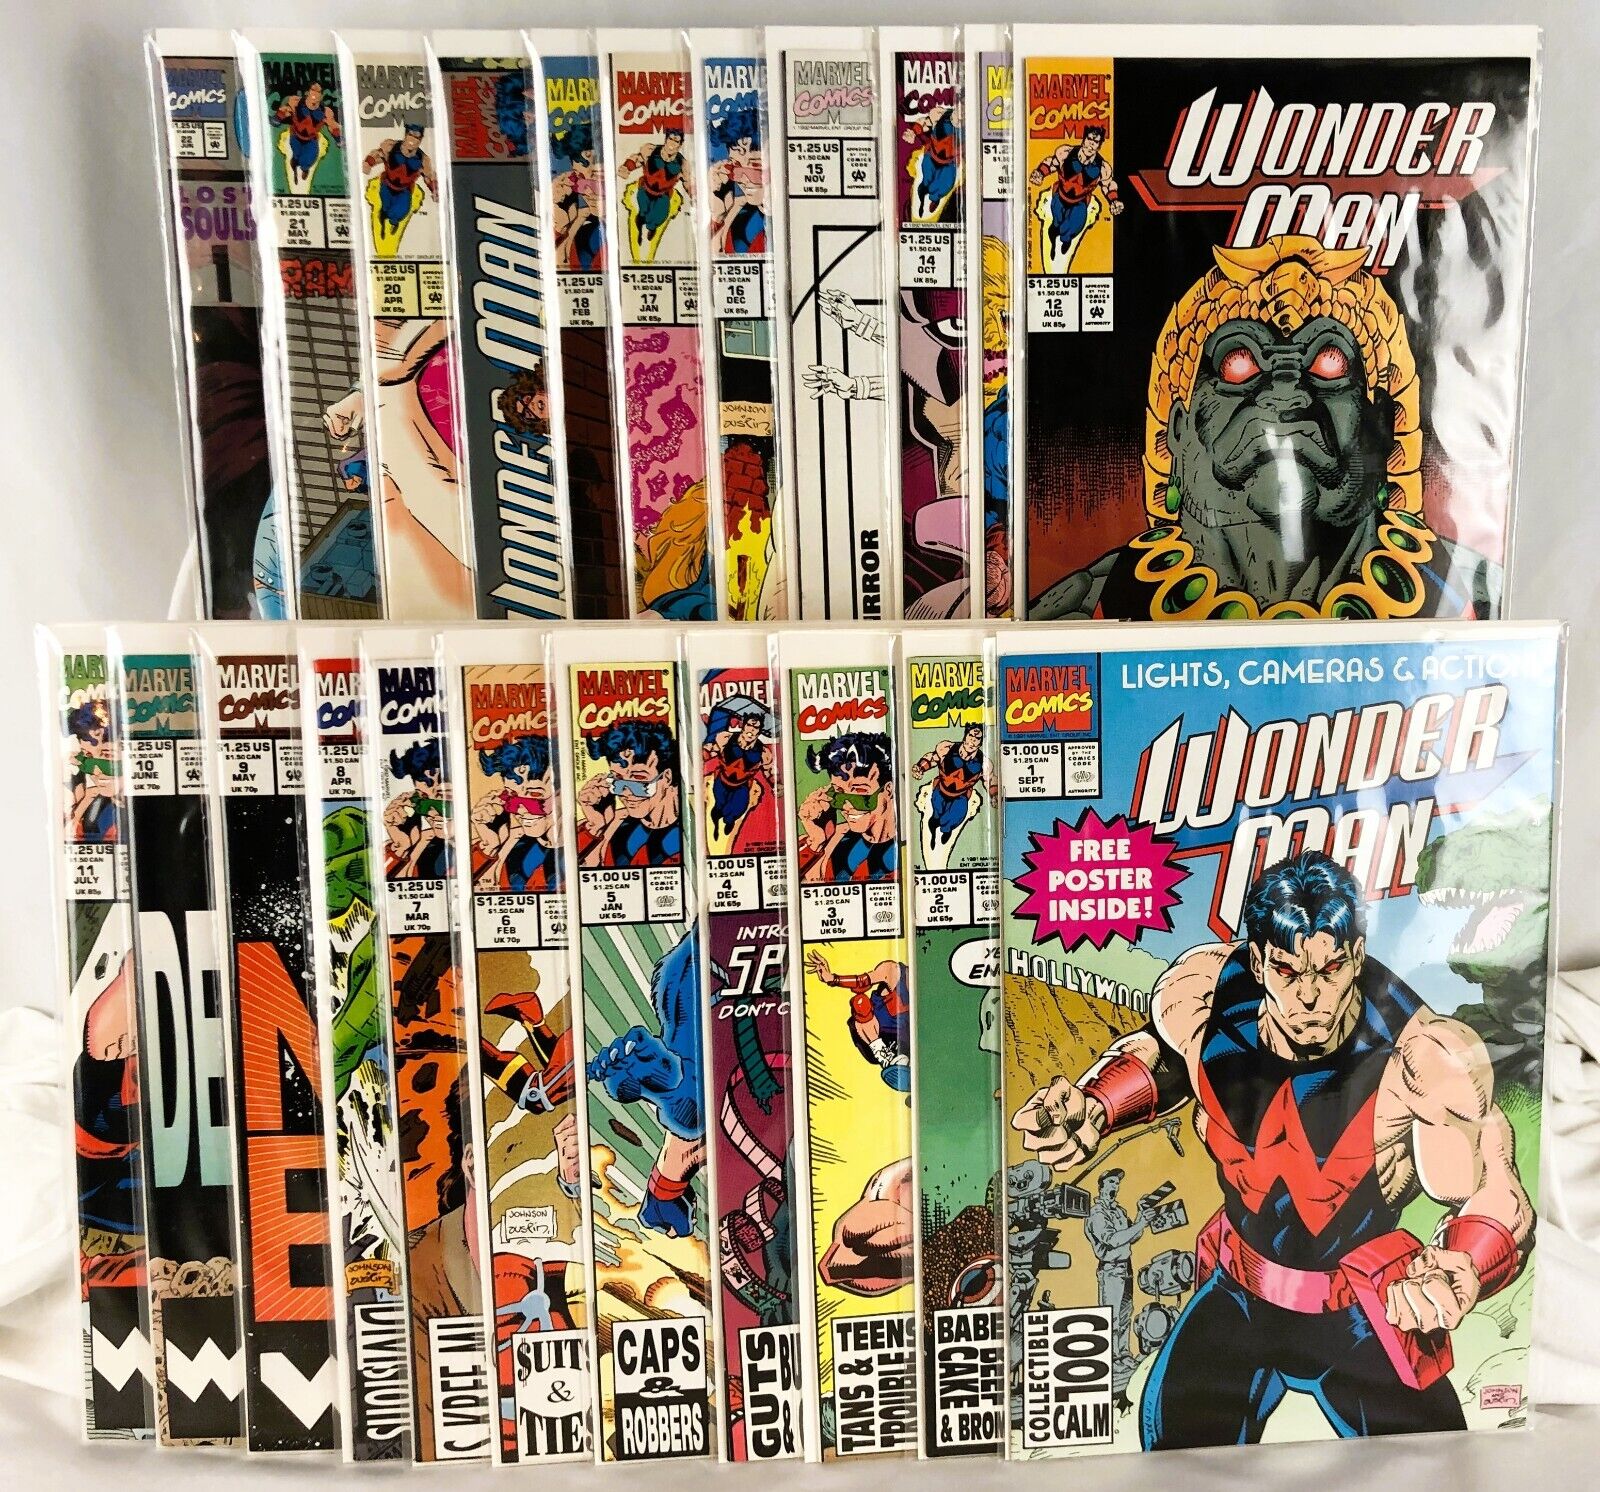 Wonder Man #1-22 (1991-93, Marvel)